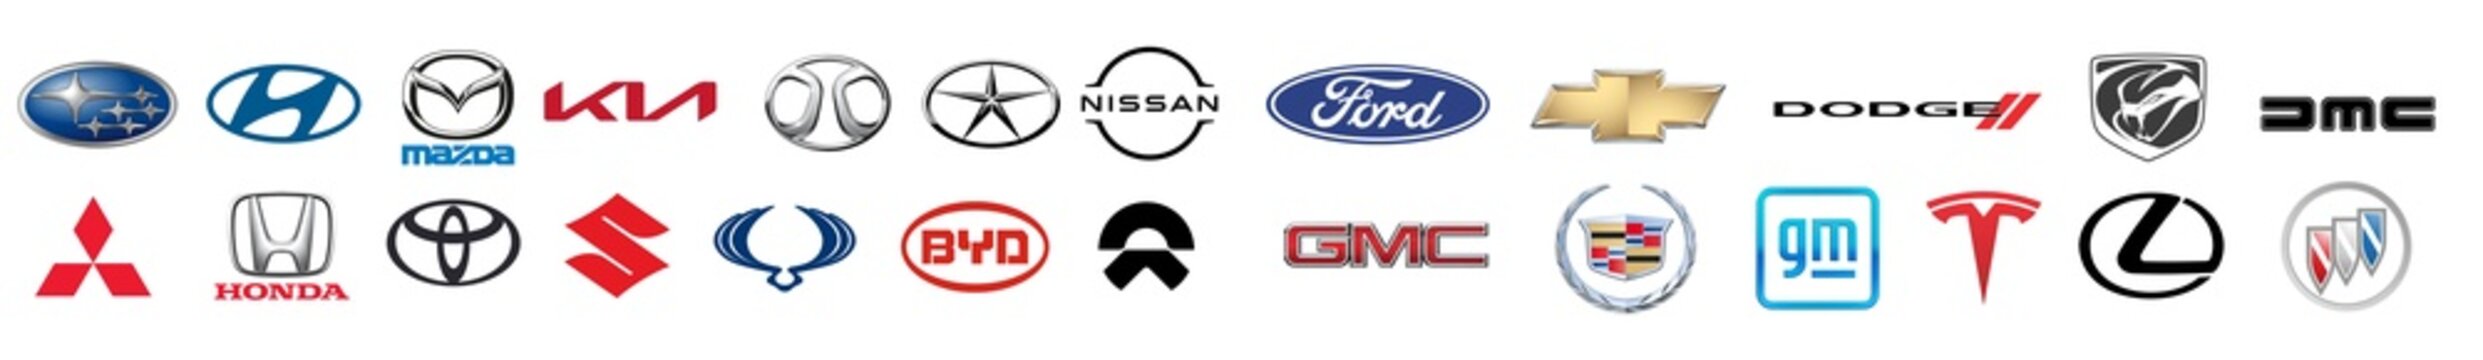 Automotive Car Logo Collection. Subaru, Hyundai, mazda, Kia, Baic, Jac, Nissan, Honda, Toyota, Suzuki, SSANG YONG, BYD, NIO, Ford; Dodge; Viper; GMC; Tesla; Lexus; Buick; Cadillac; Chevrolet icon set